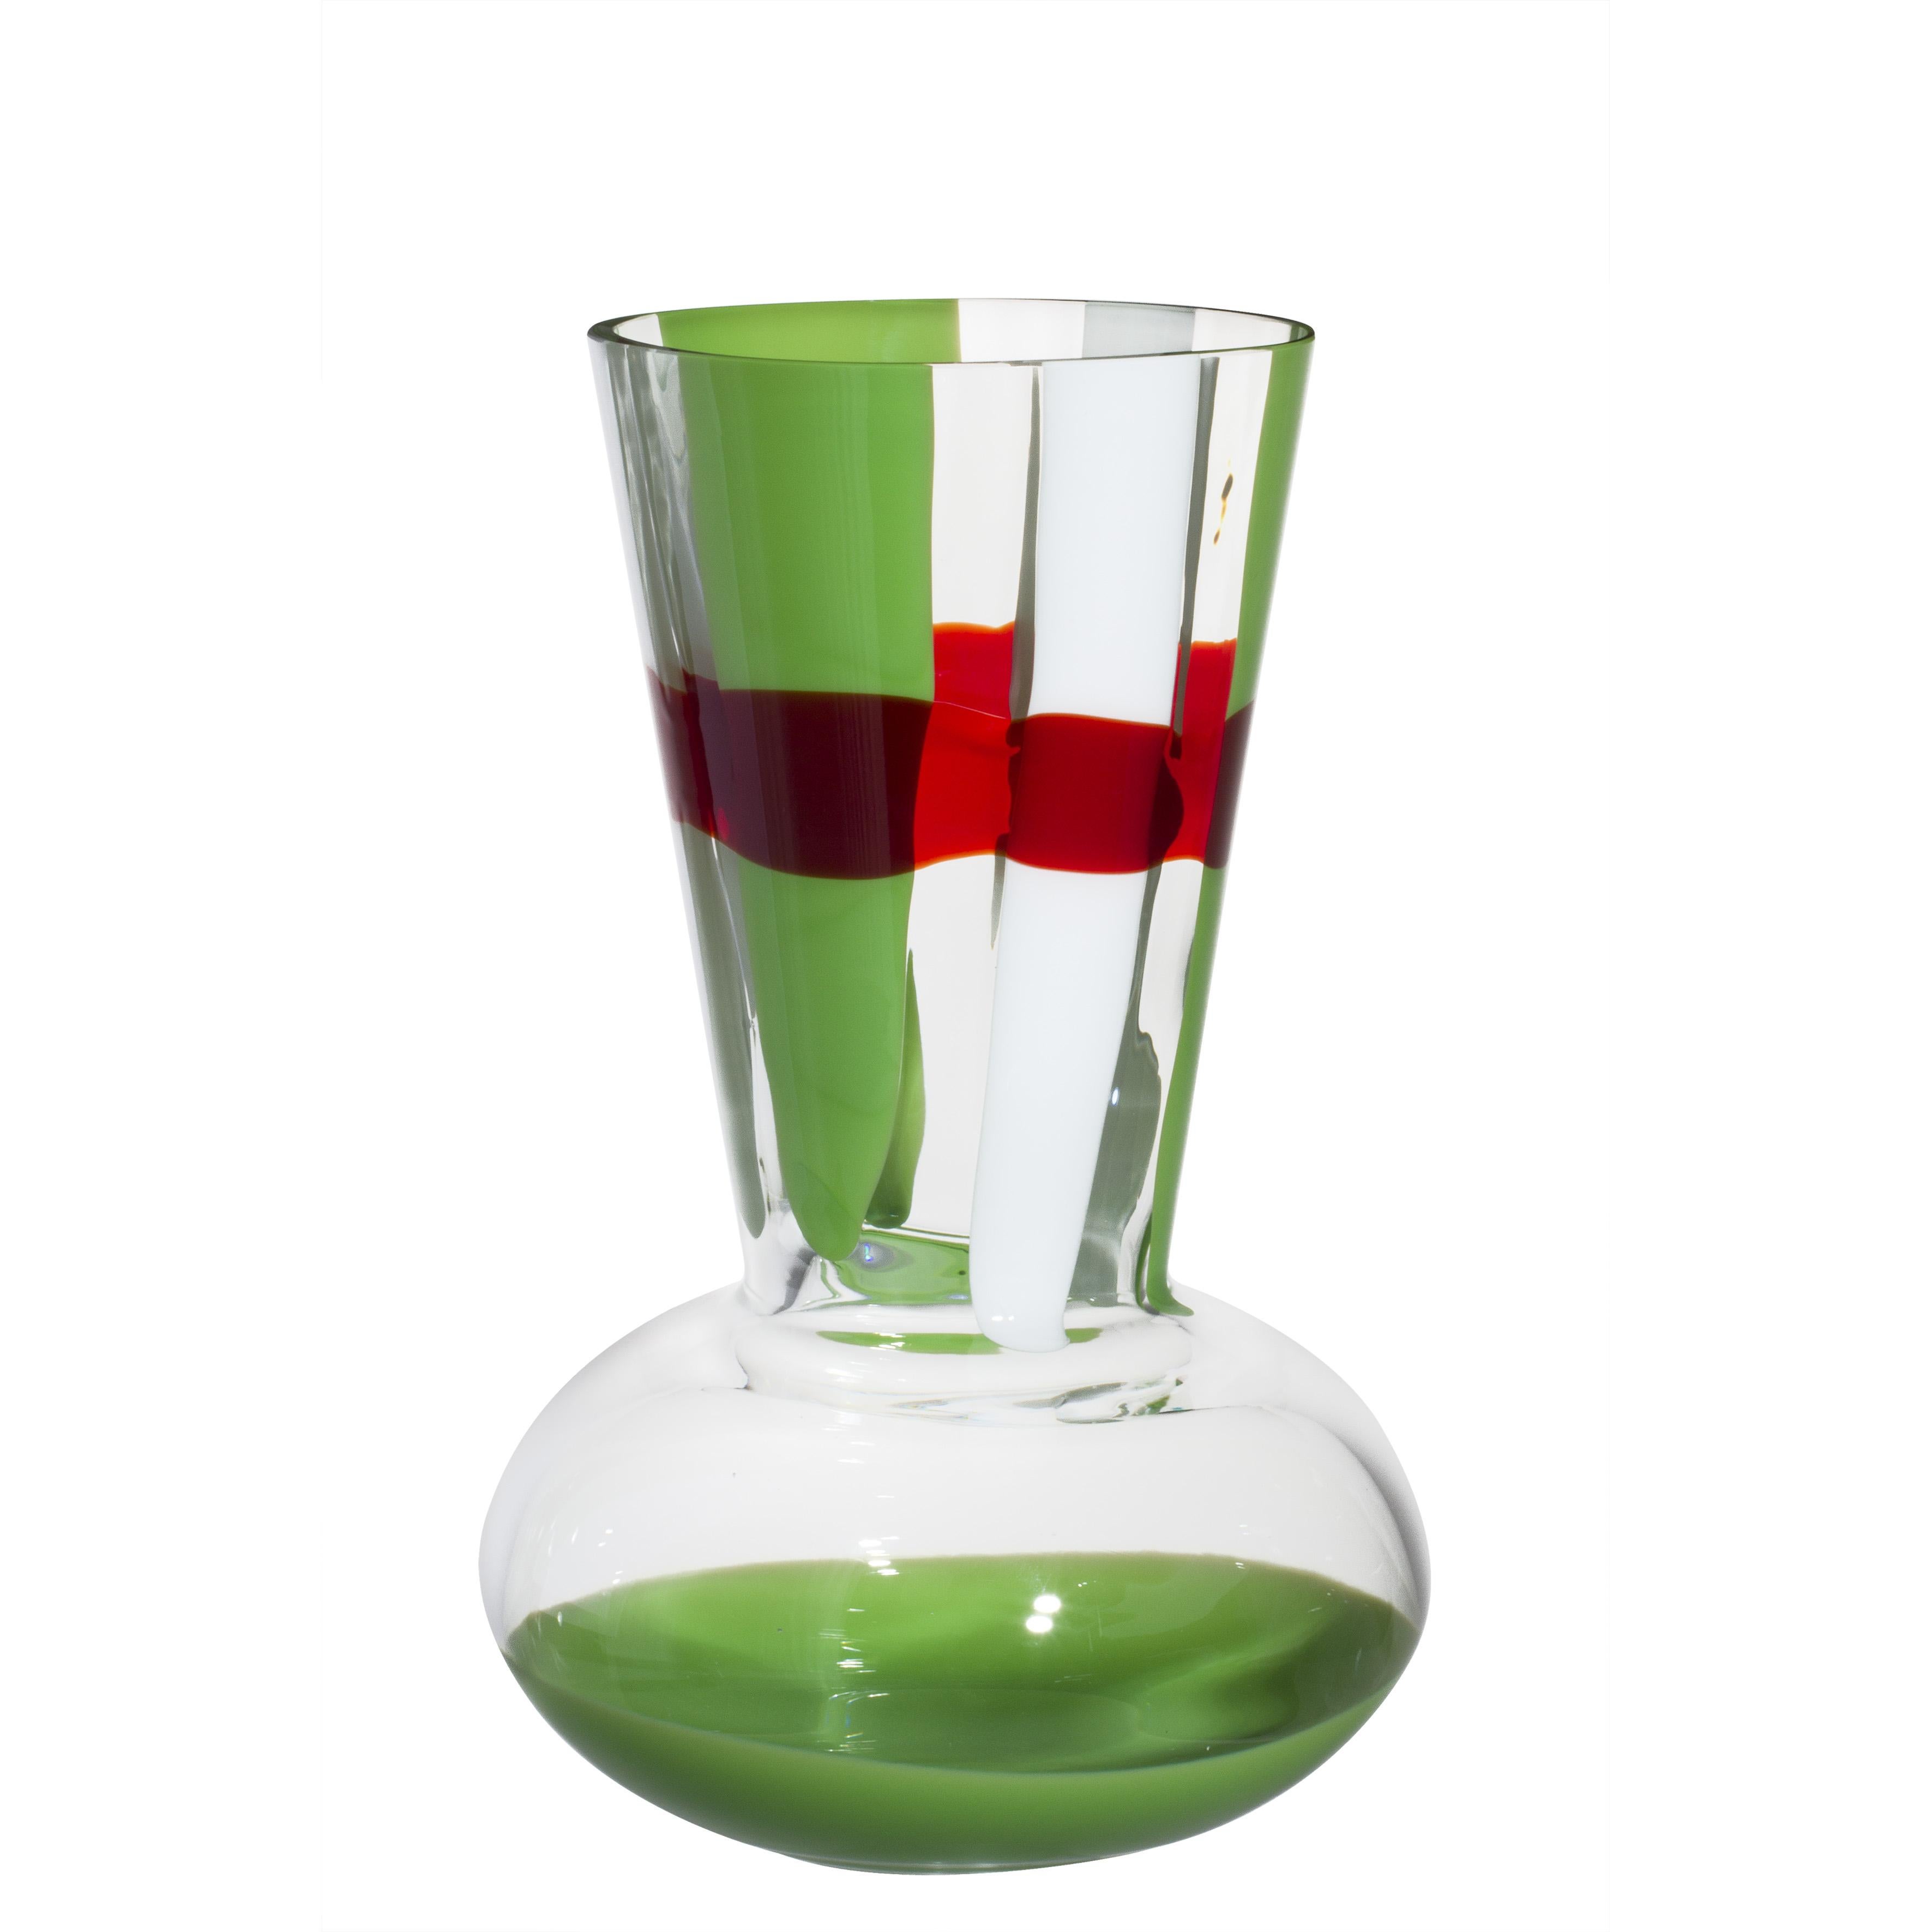 Medium Troncosfera Vase in Red, Green, and White by Carlo Moretti